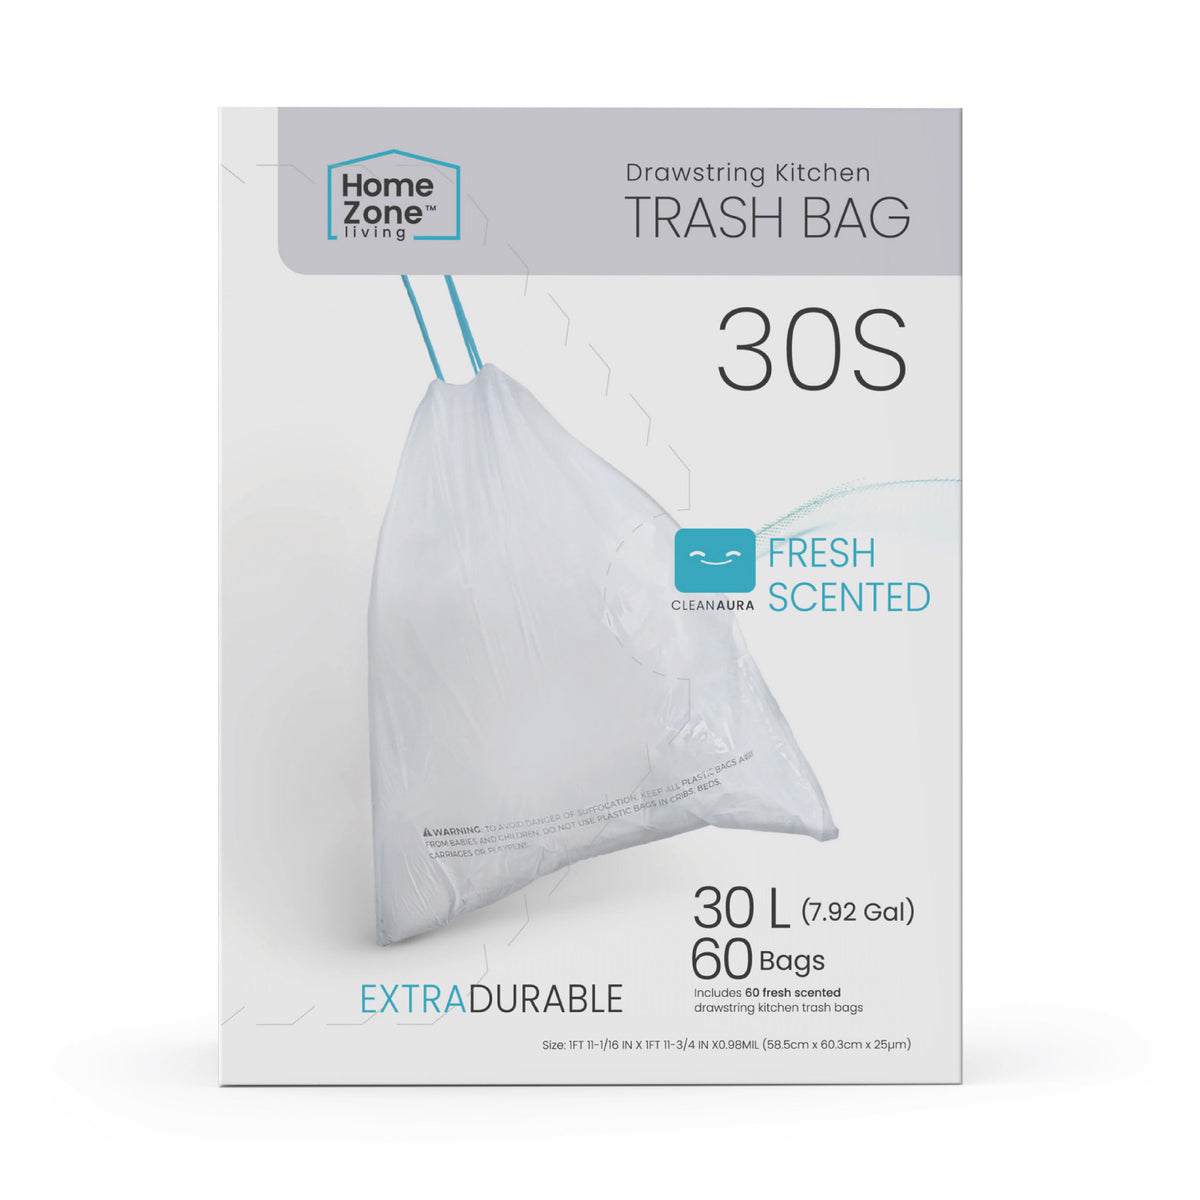 Trash bag 30 L x 15 with sliding handles